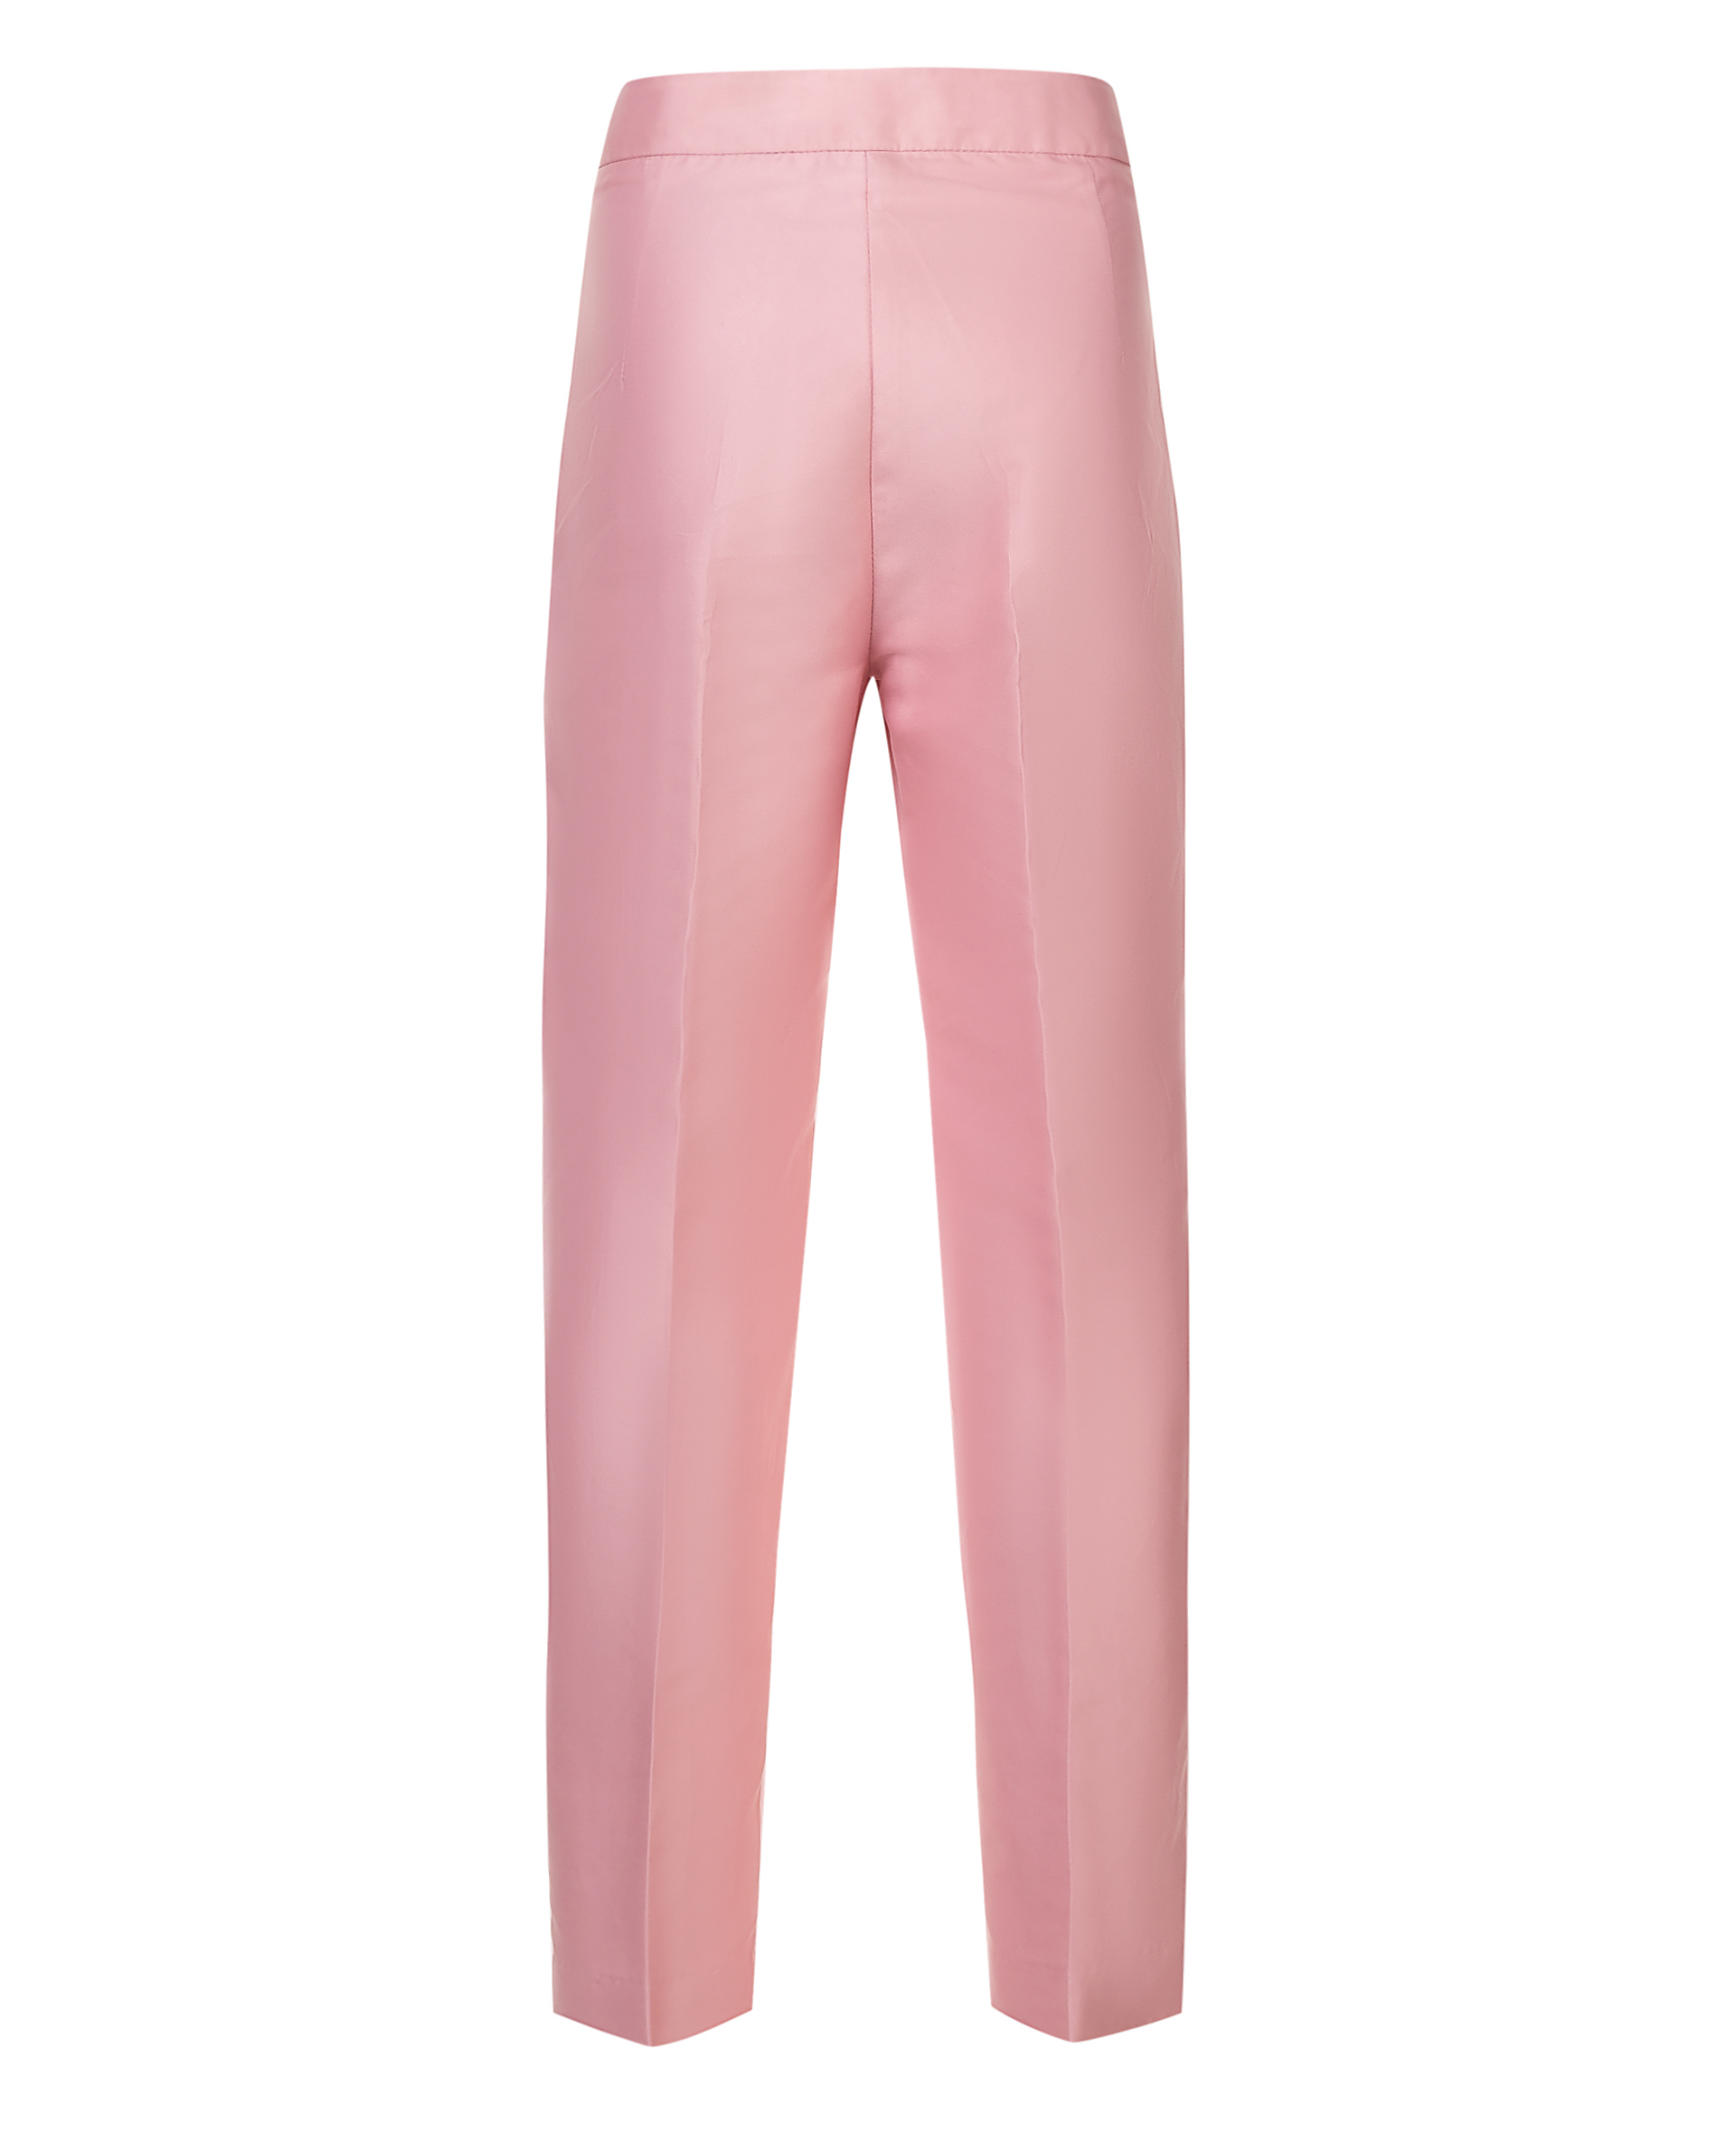 Розовые брюки Gulliver 119GPGJC6301, размер 158, цвет розовый - фото 2